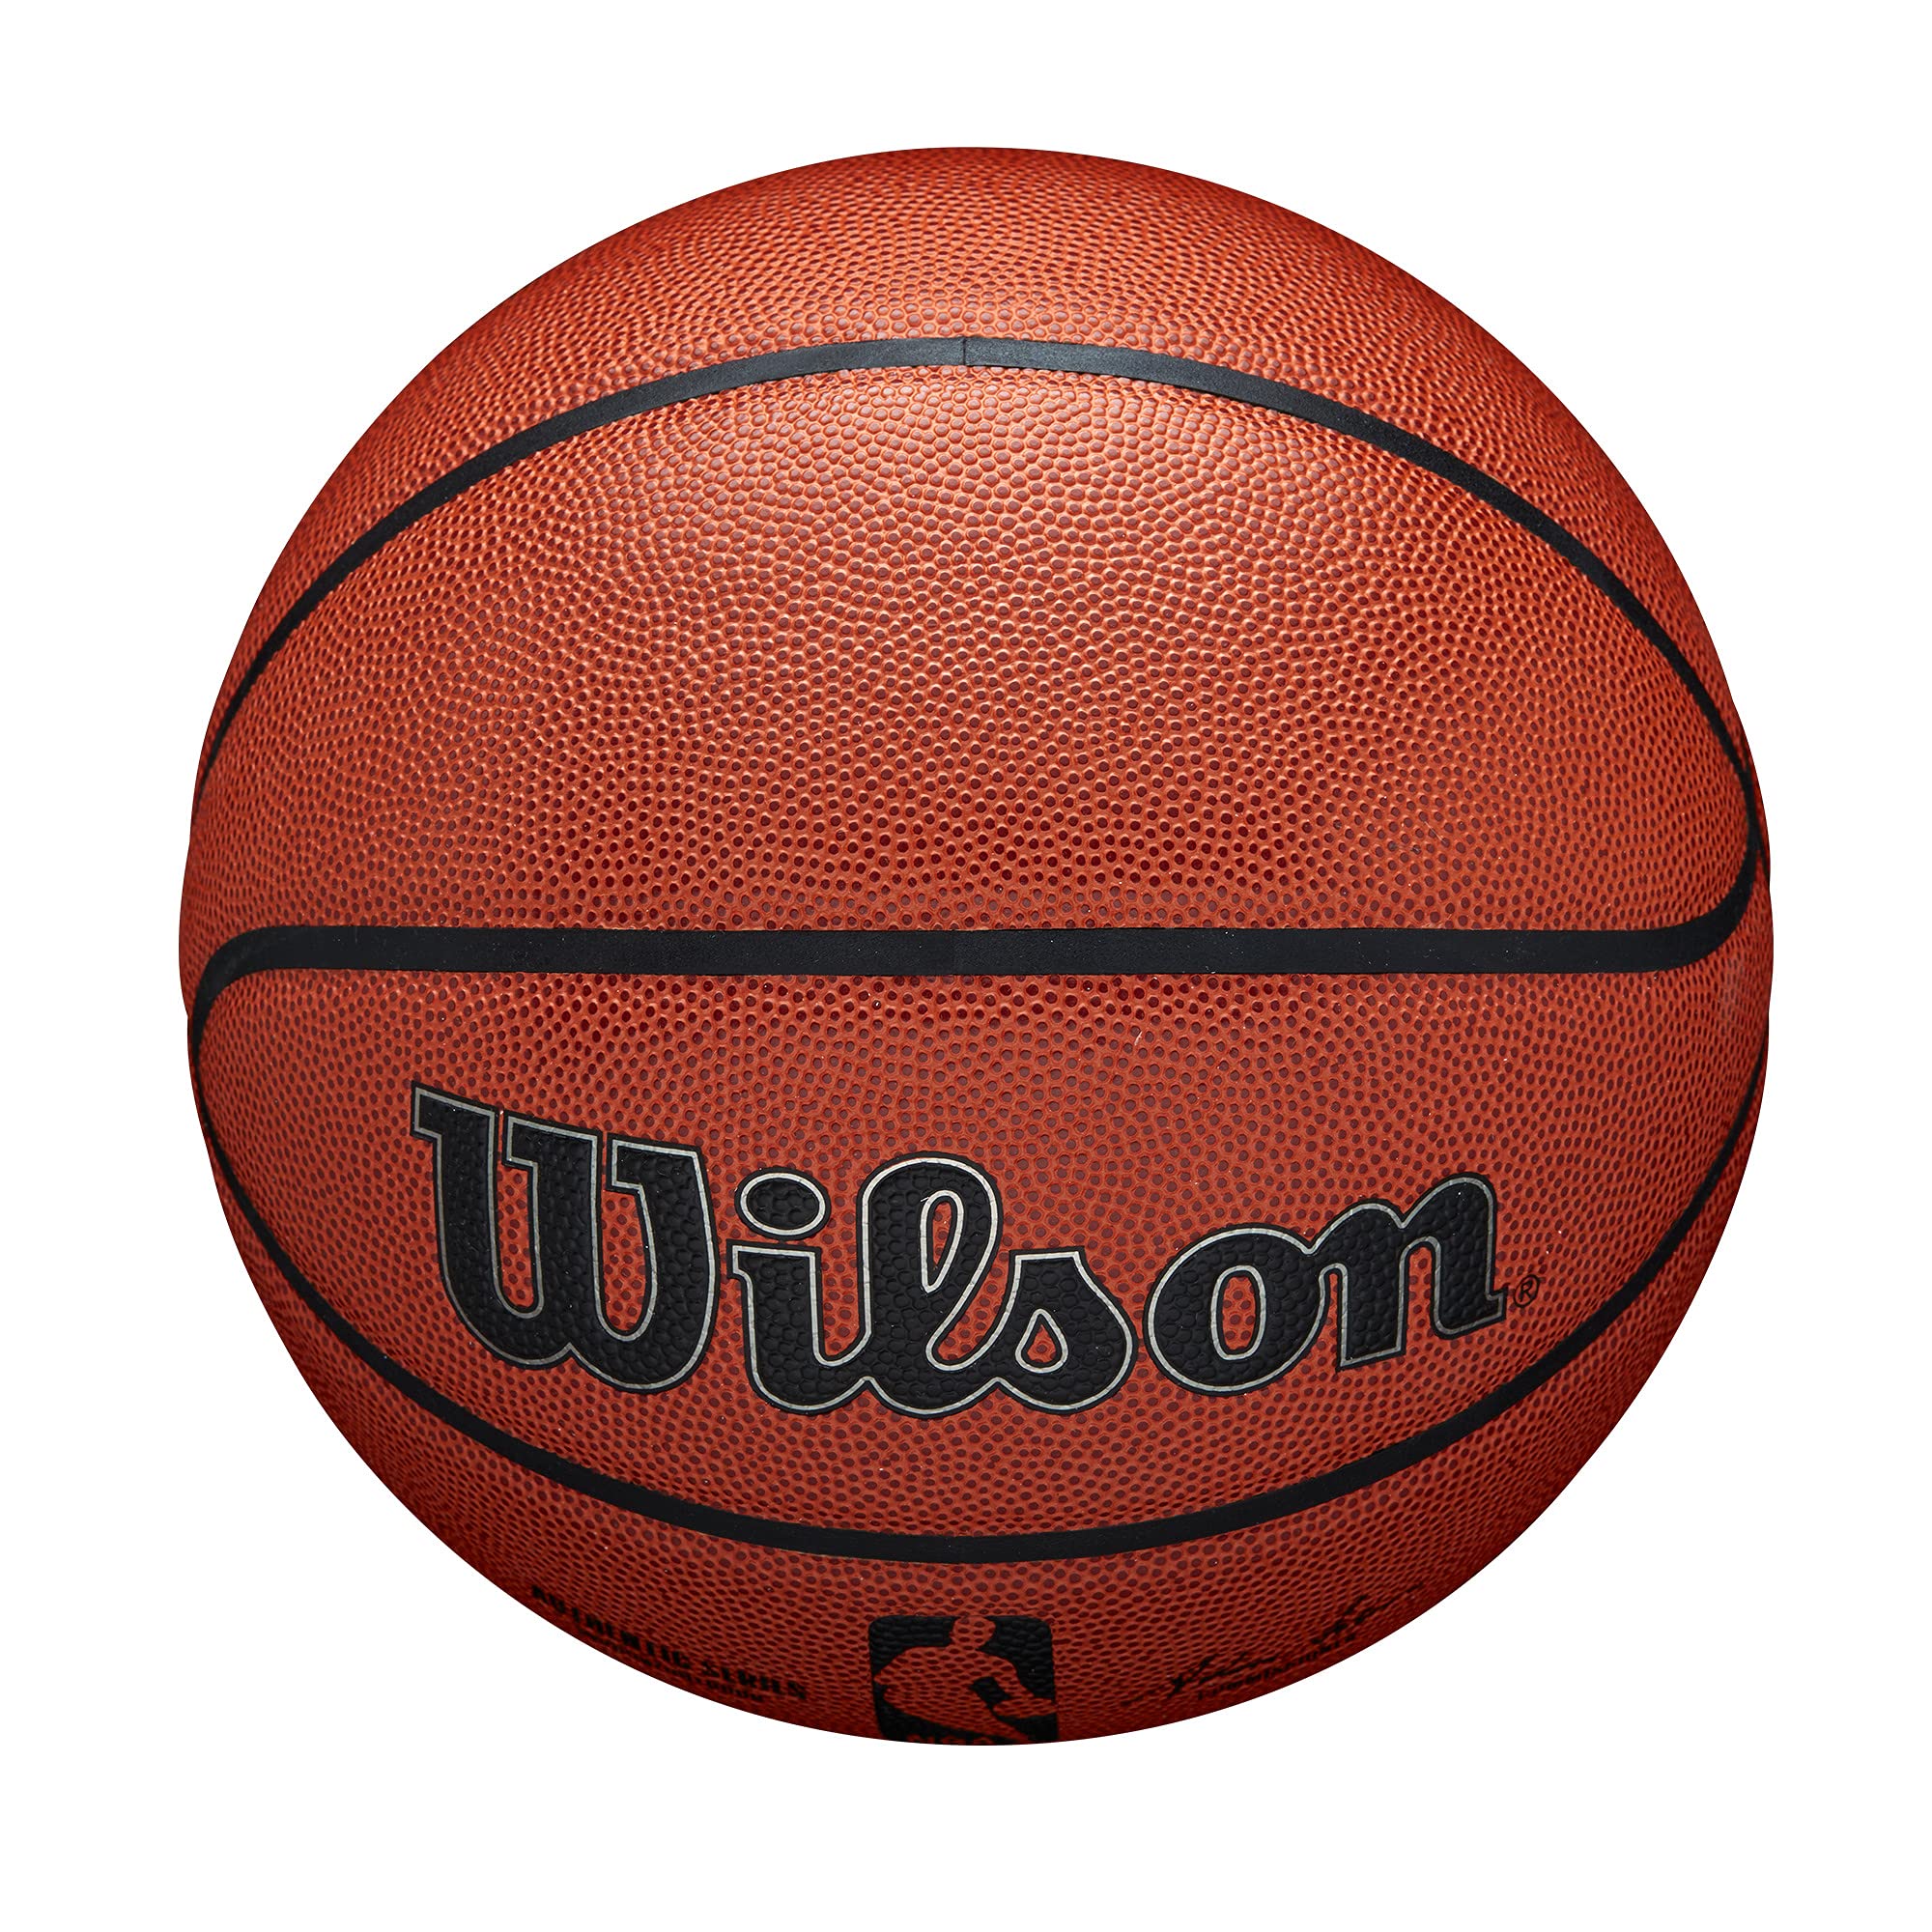 WILSON NBA Authentic Series Basketballs